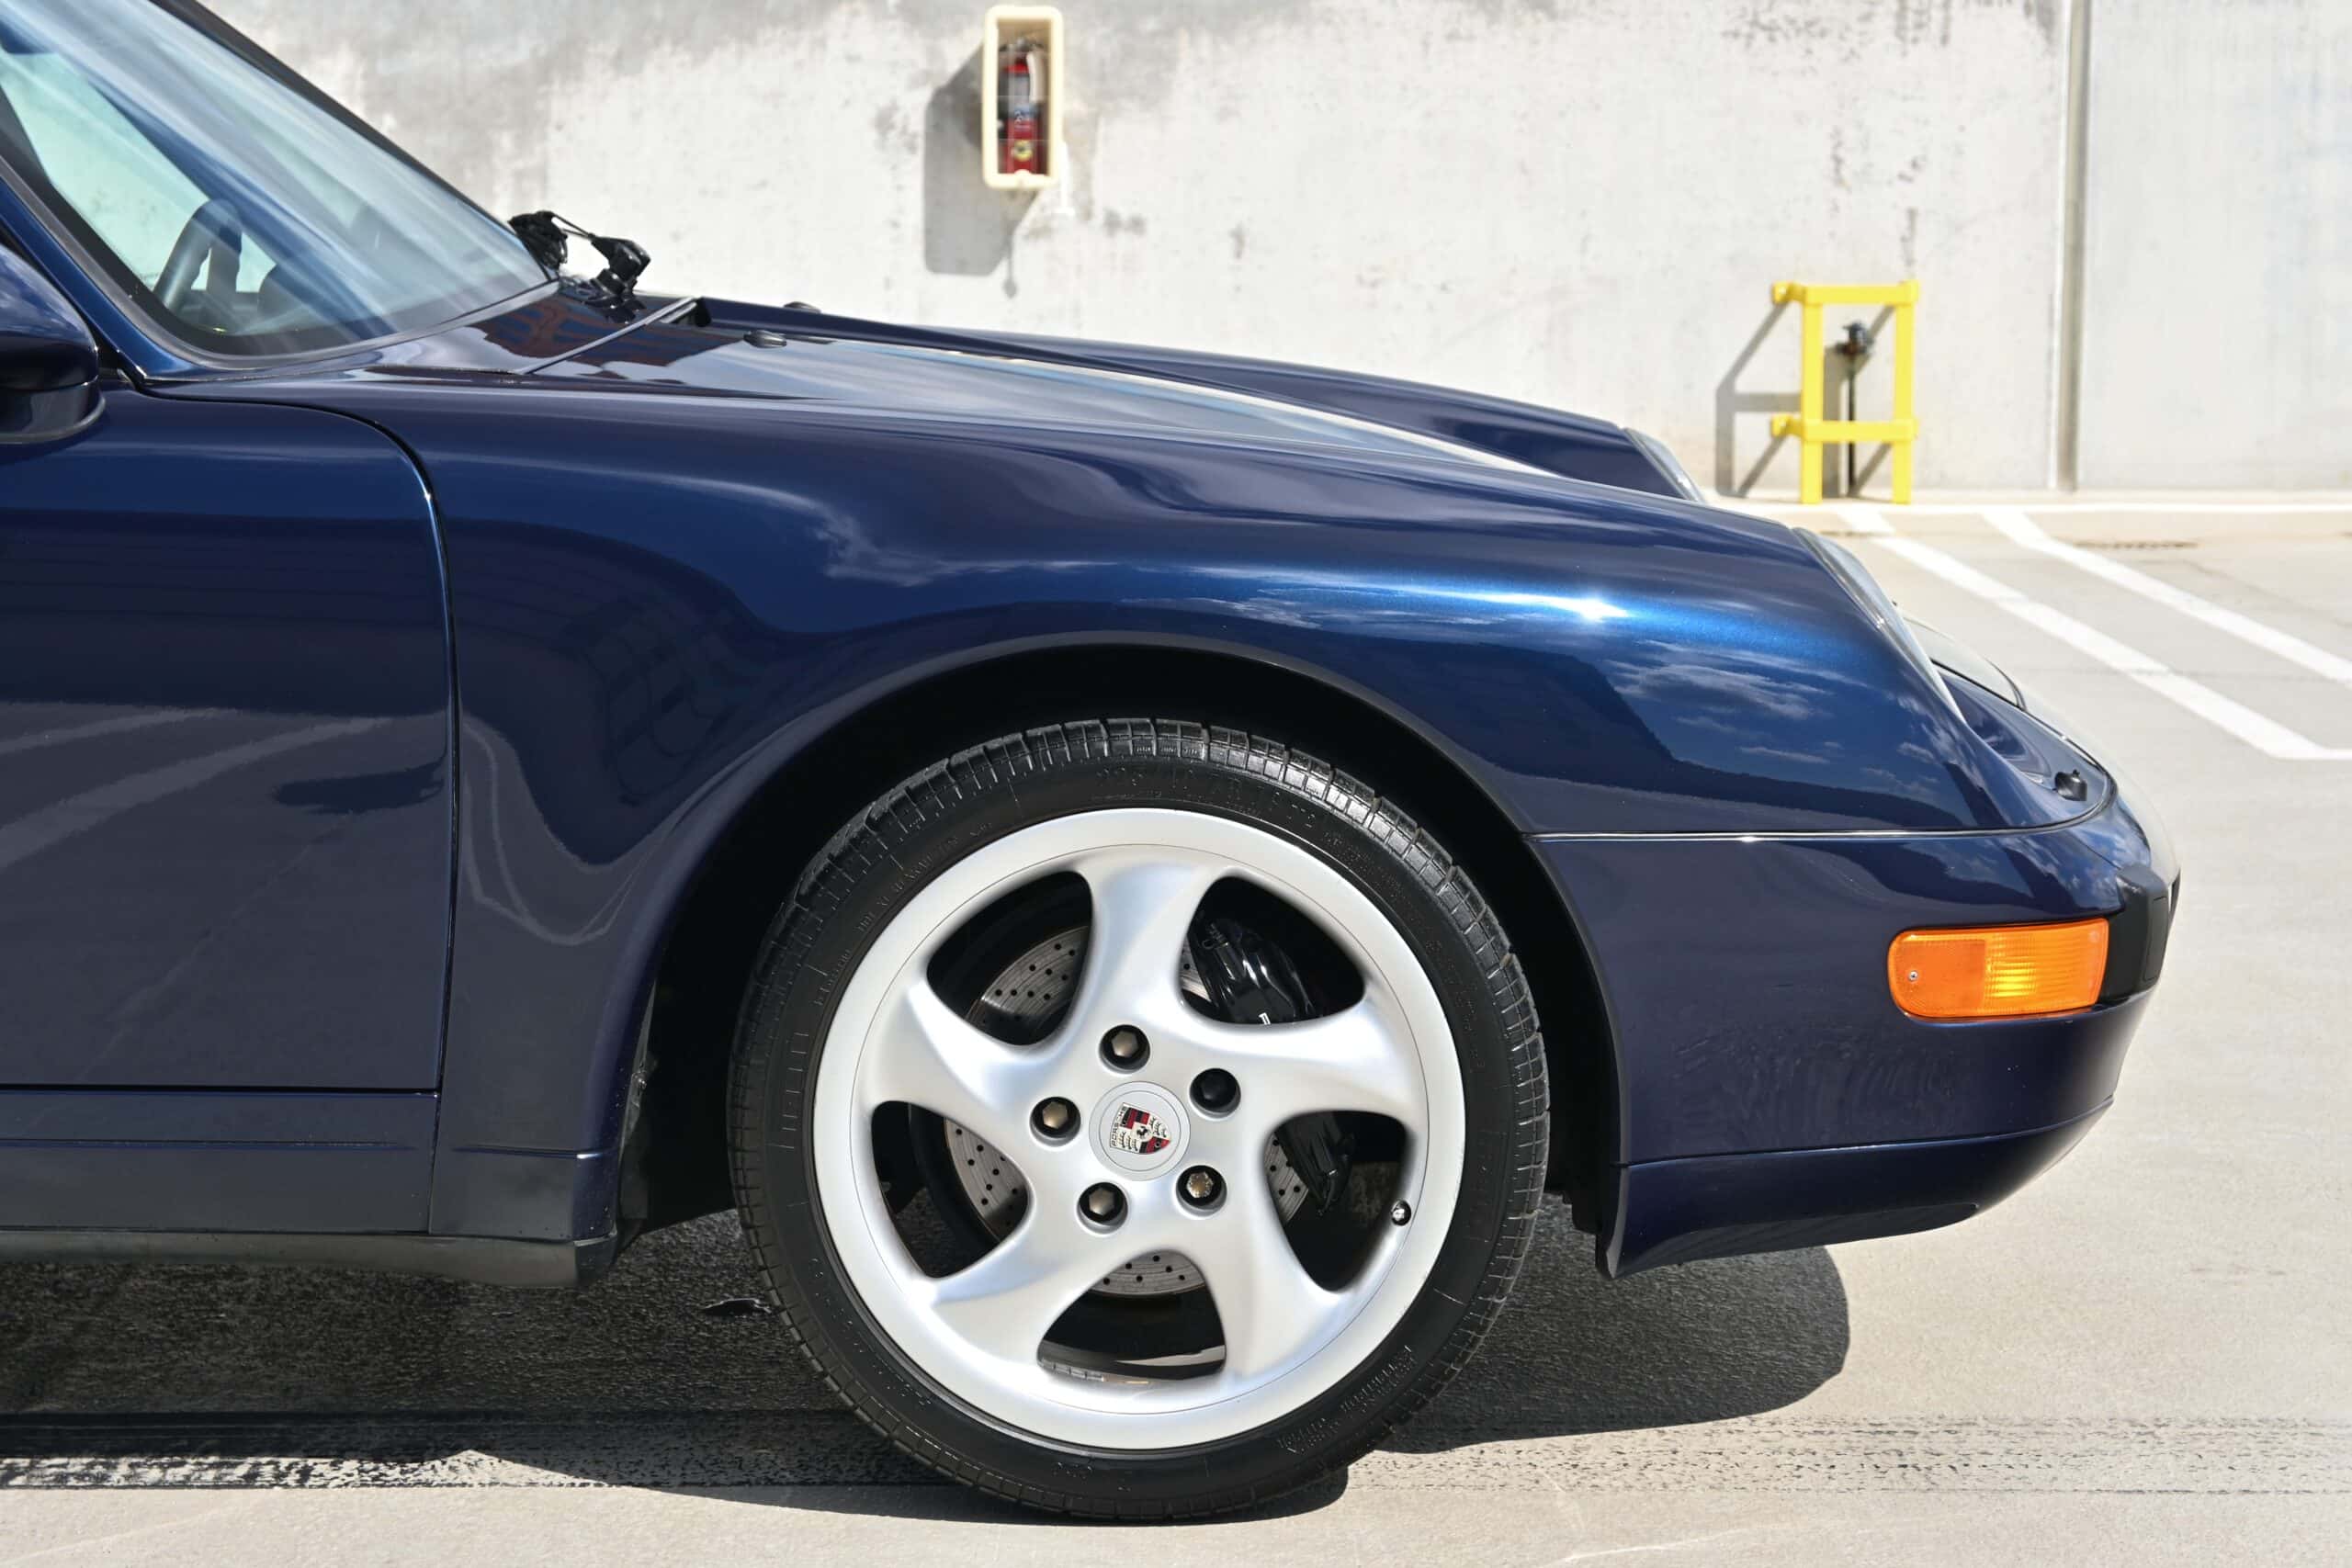 1997 Porsche 911 993 Carrera California Car – Only 37K Documented Actual Miles – Original Oceanblue Paint